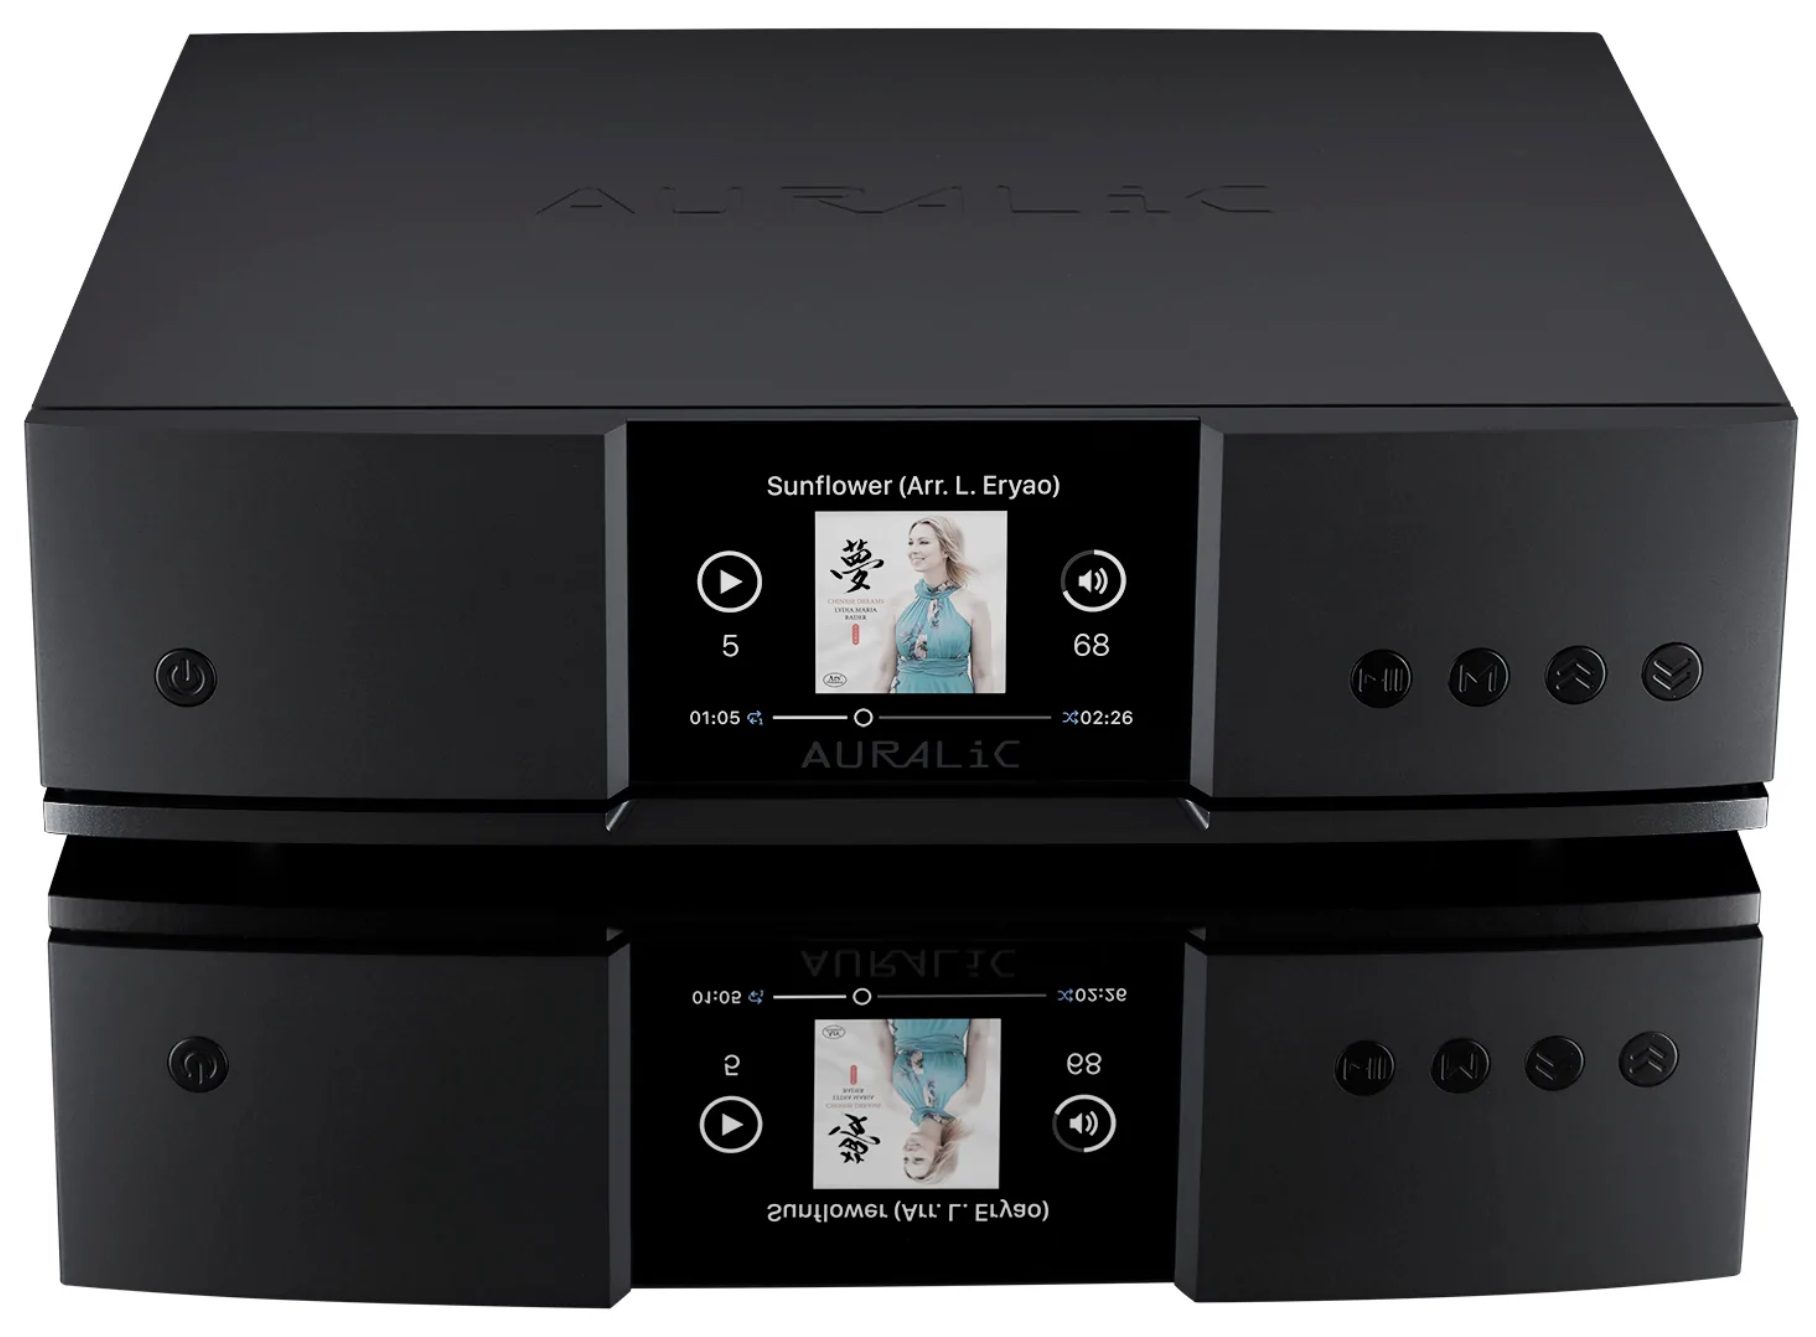 Auralic Aries G2.1 – 2TB SSD - Audio streamer